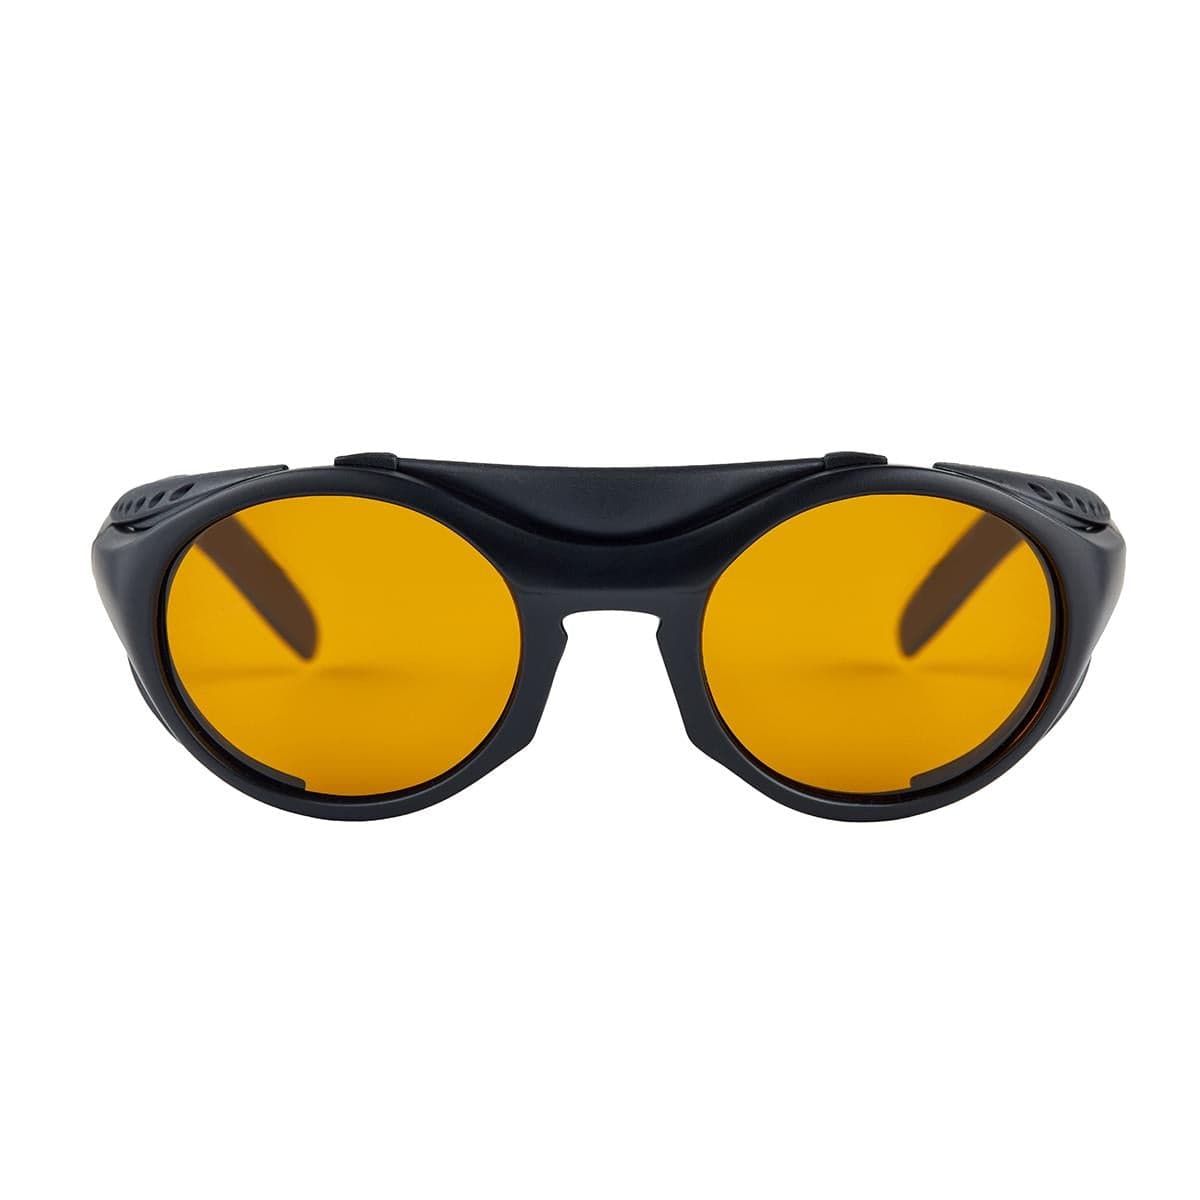 Fortis Isolators Polarised Sunglasses - AMPM Amber- Carp Fishing.